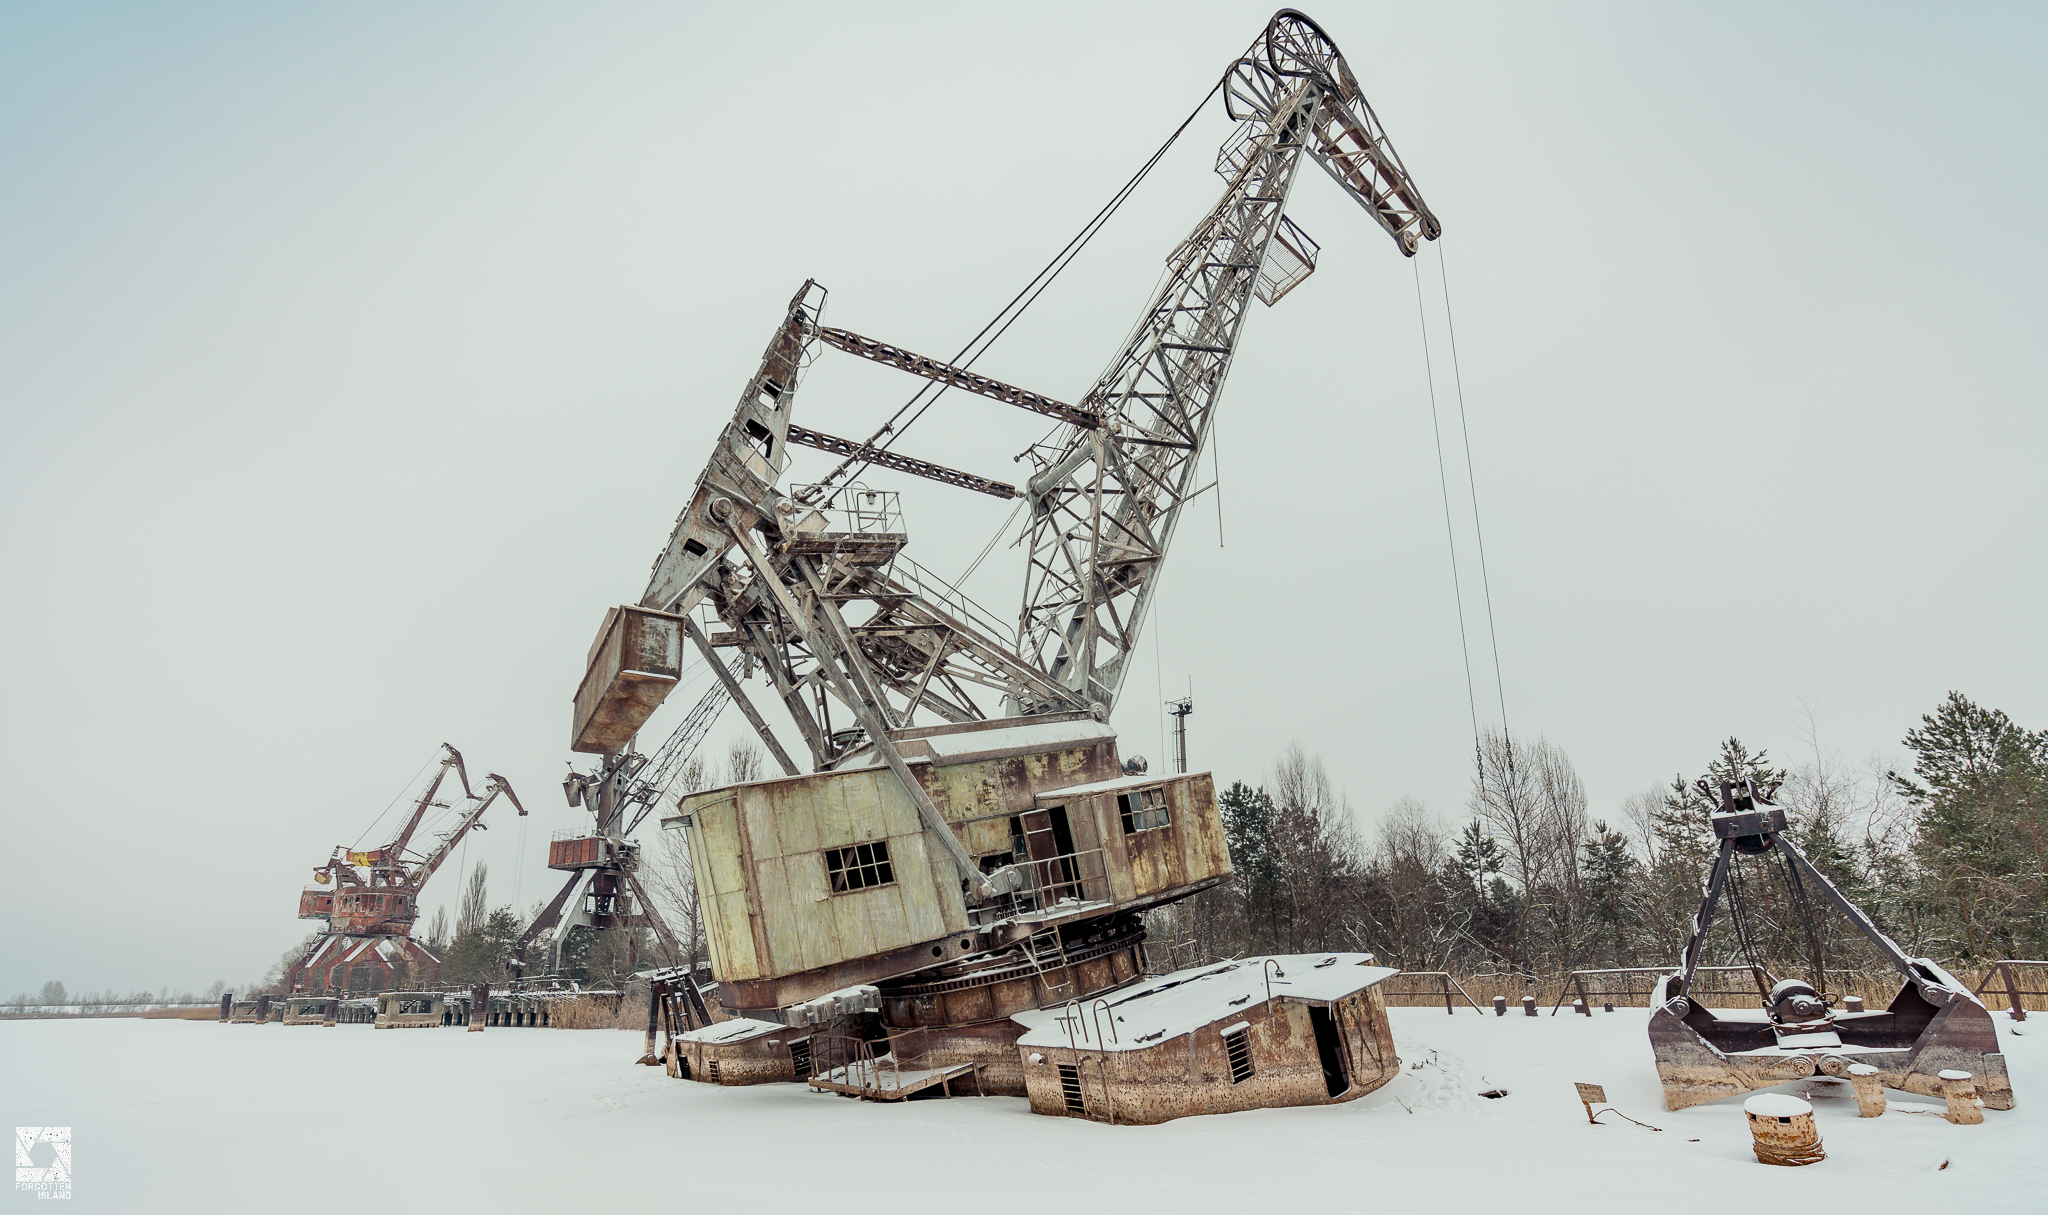 Climbing Pripyat Dock cranes in winter (video)